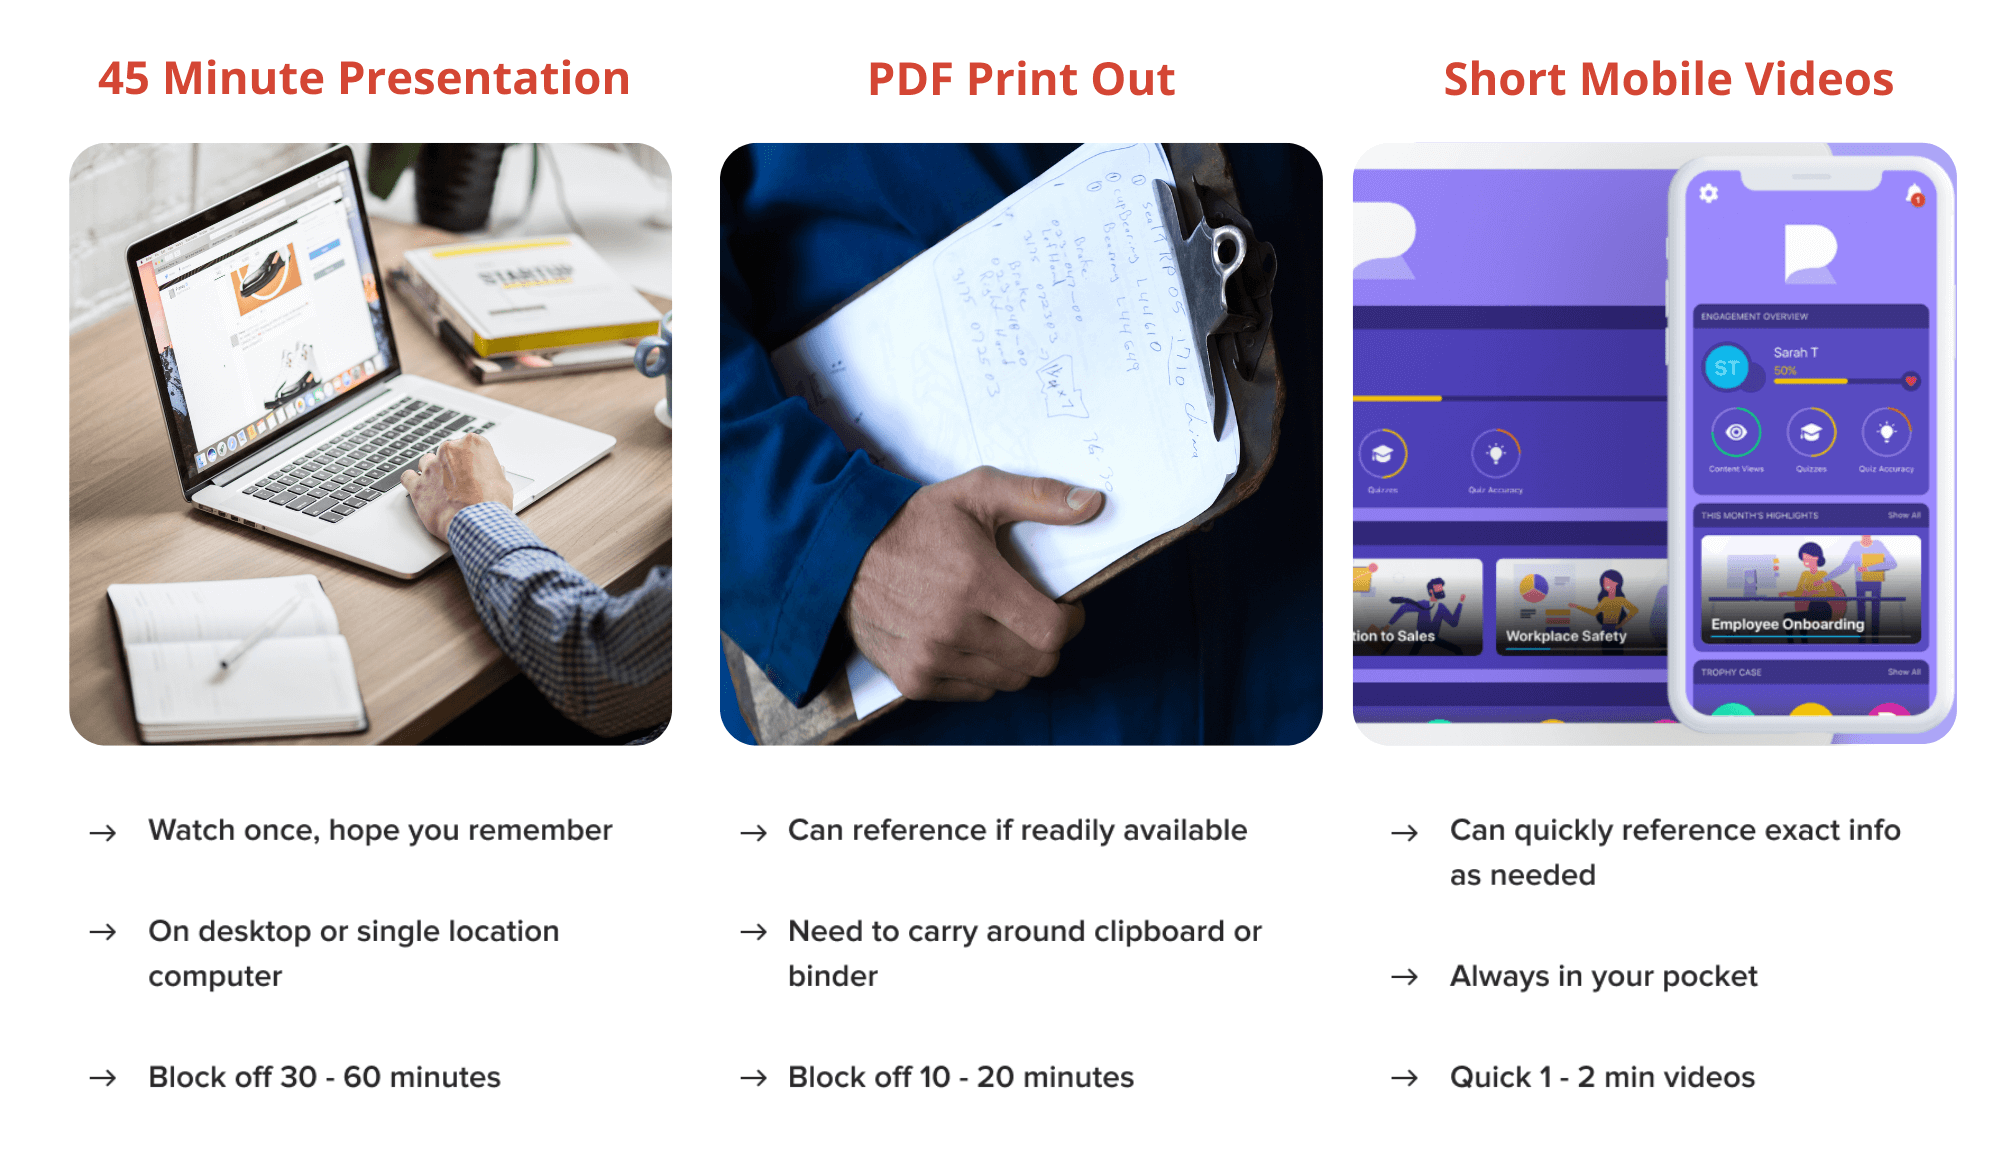 Enterprise LMS: 45min presentation vs PDF print-out vs Short mobile videos